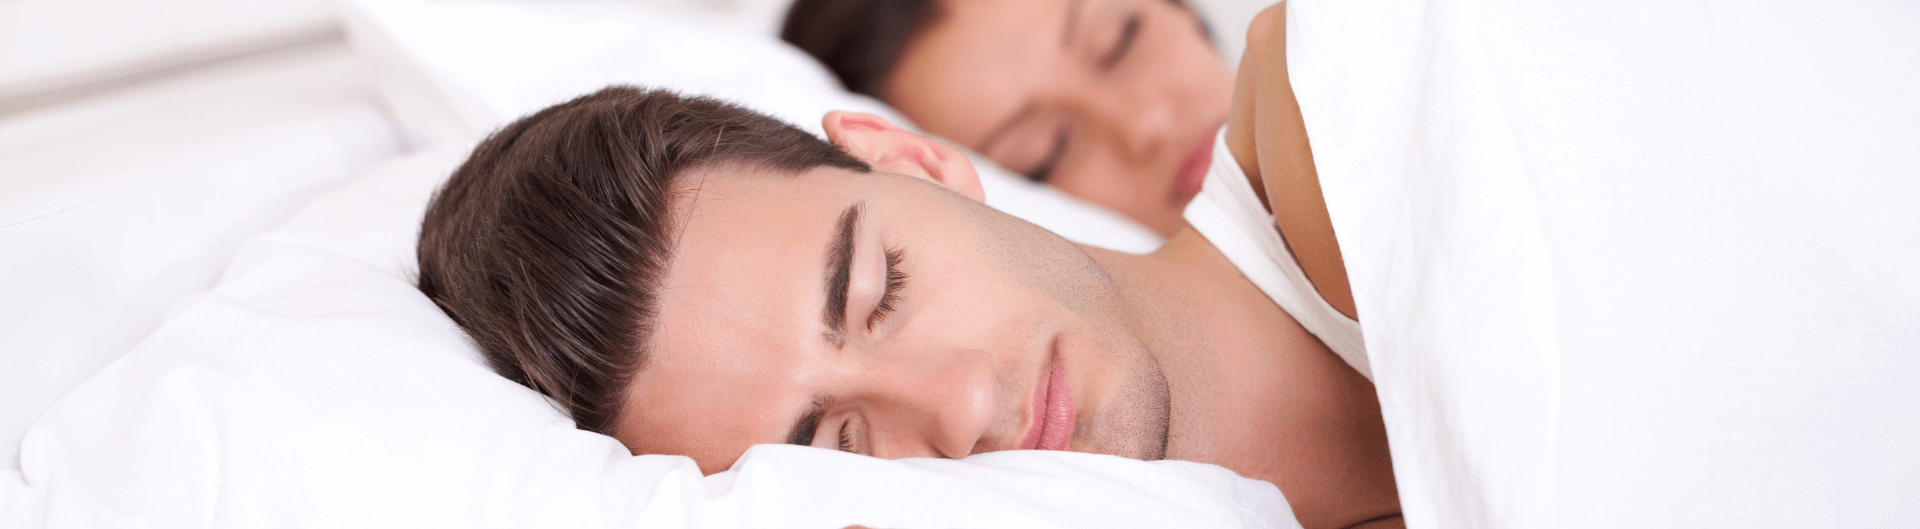 How to Get a Good Night’s Sleep